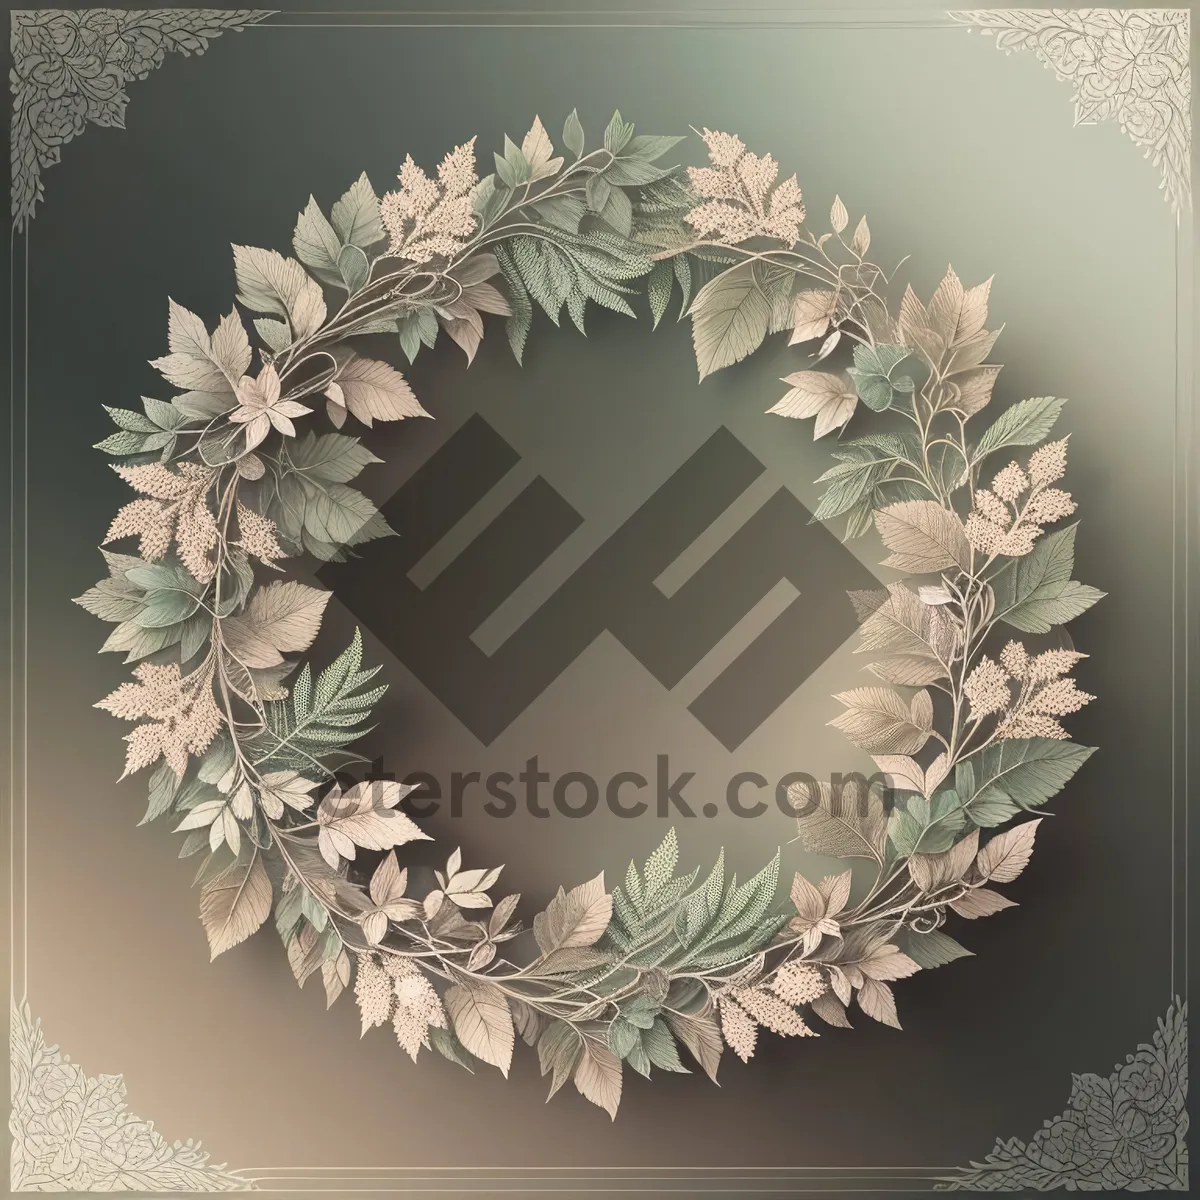 Picture of Ornate Winter Floral Border - Vintage Snowflake Design